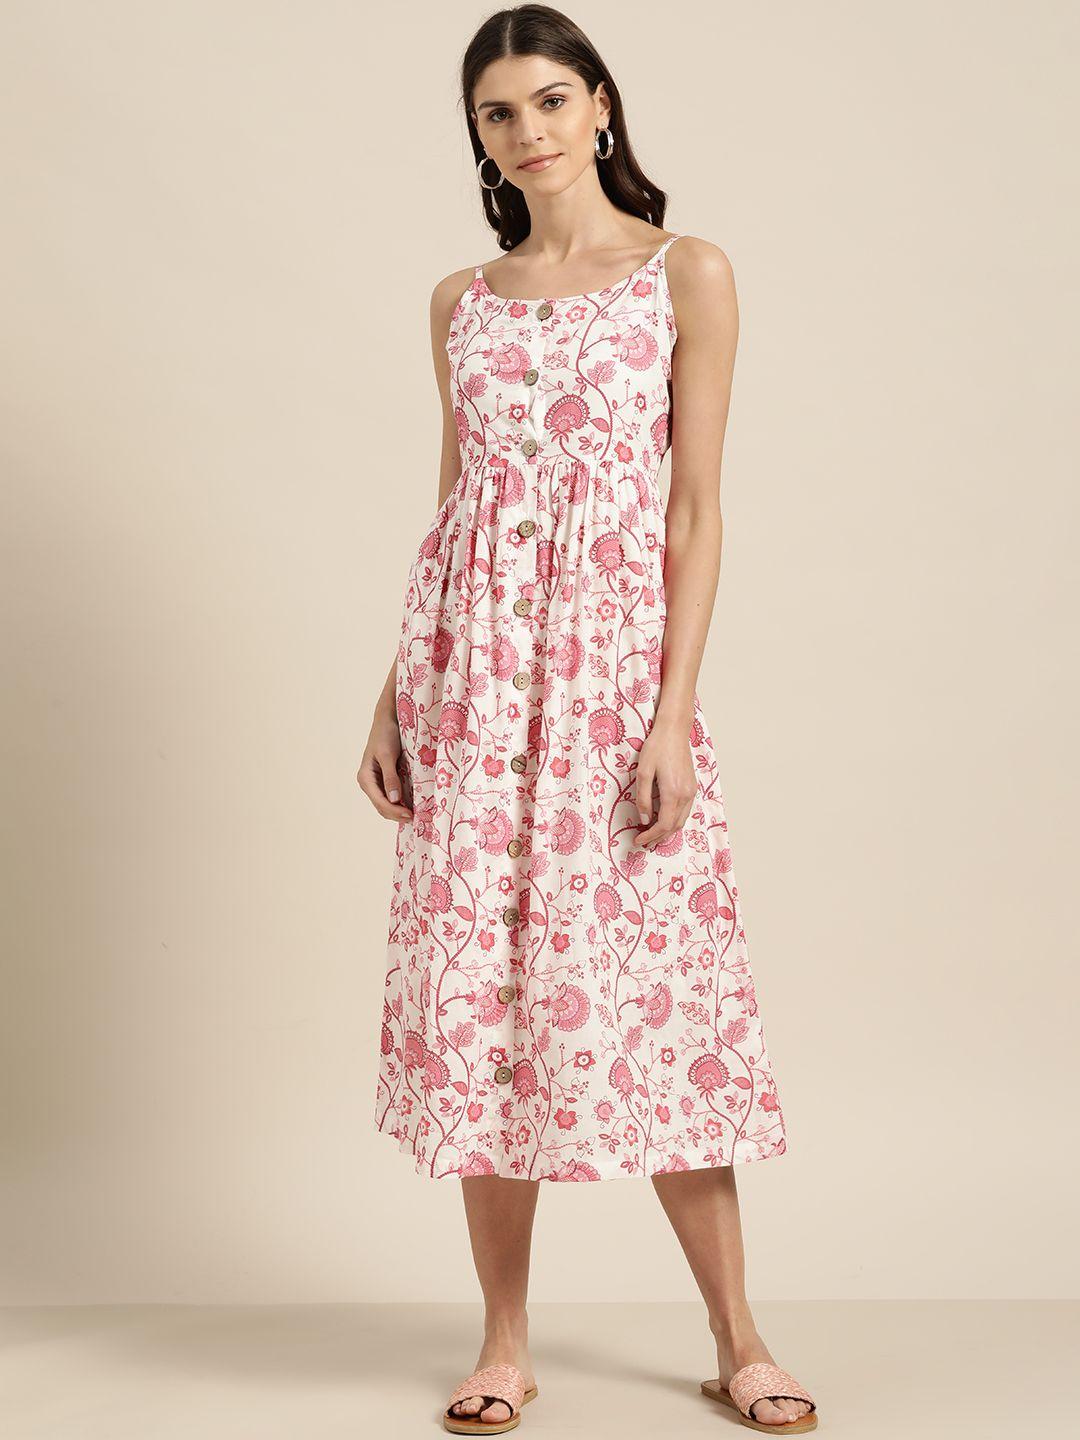 shae by sassafras women white & pink printed a-line dress